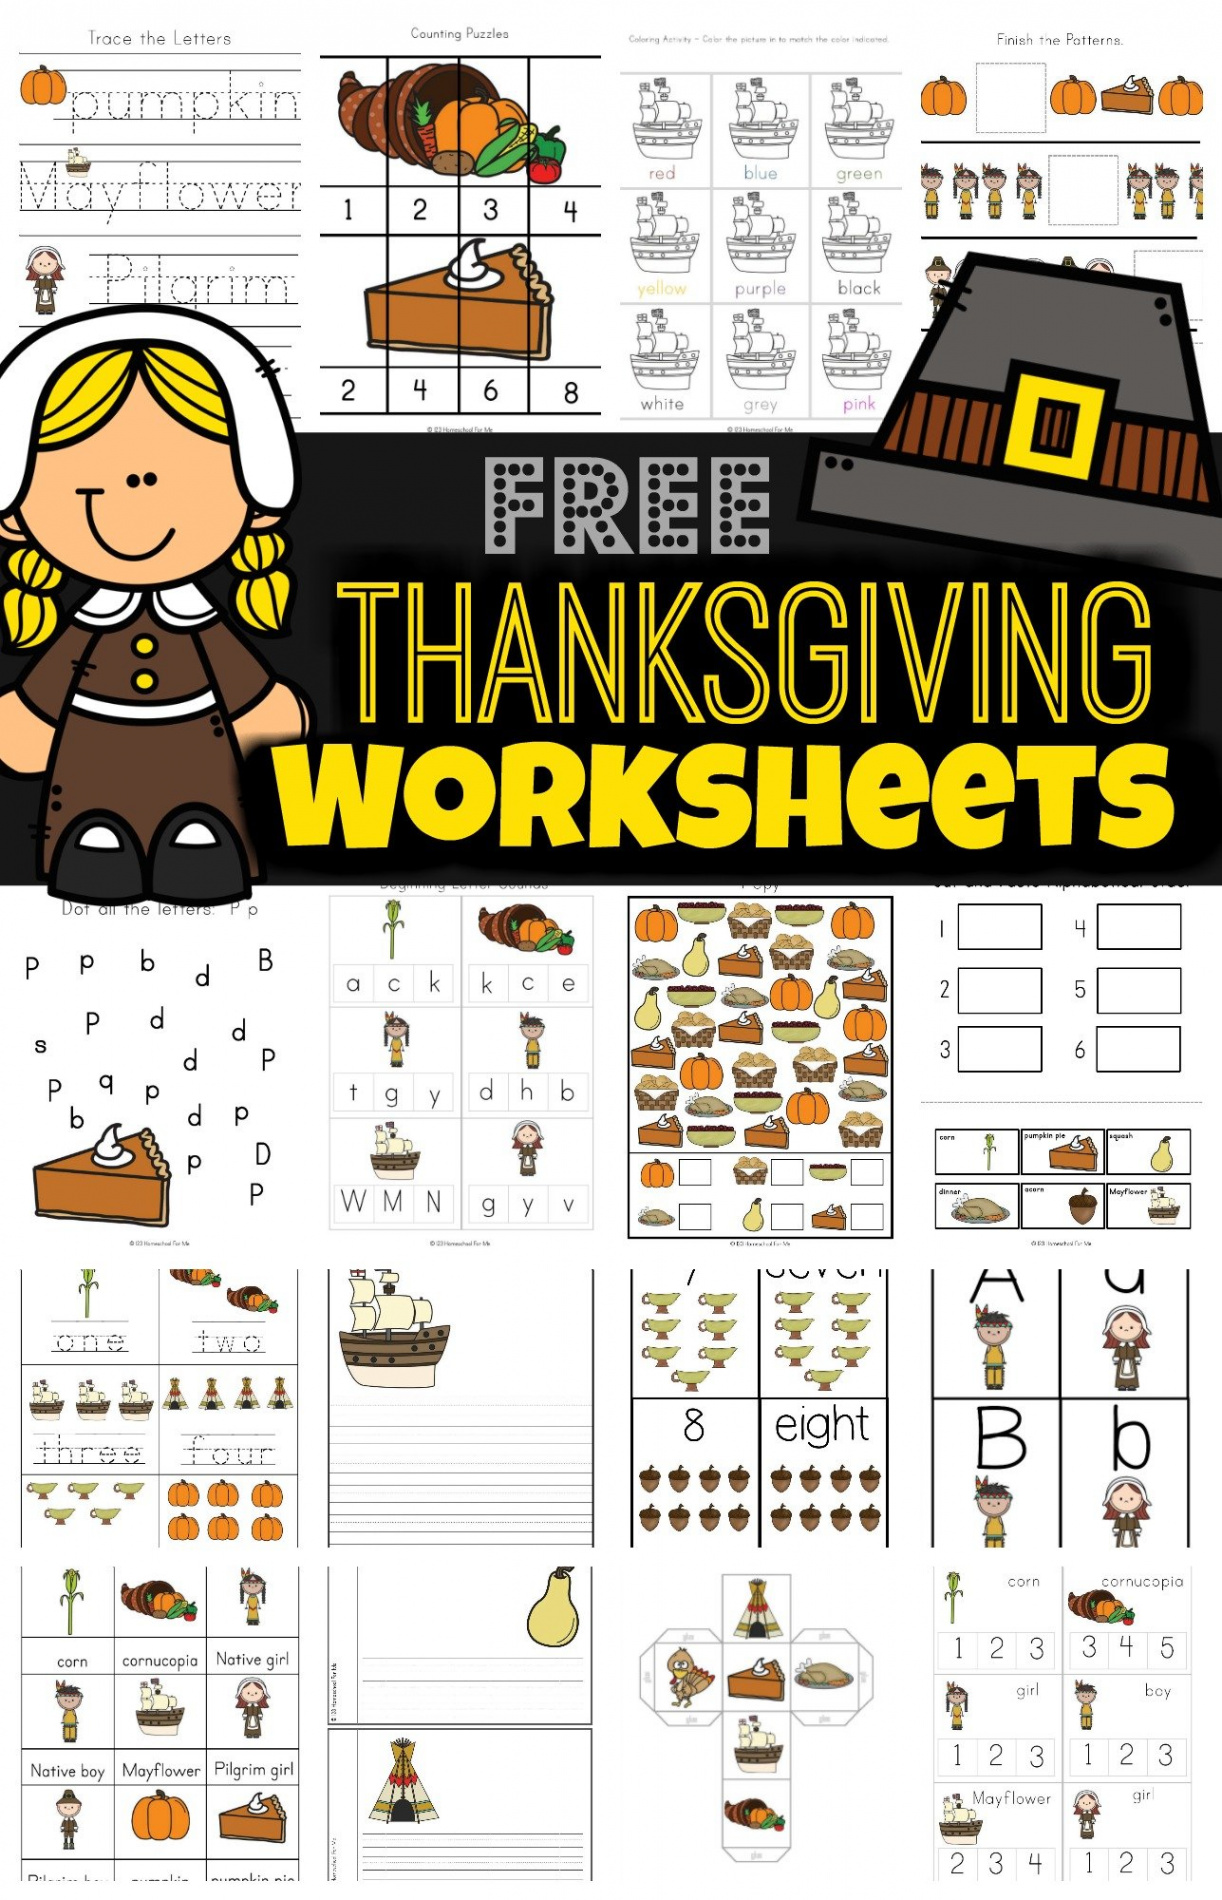 FREE Thanksgiving Worksheets for Kids